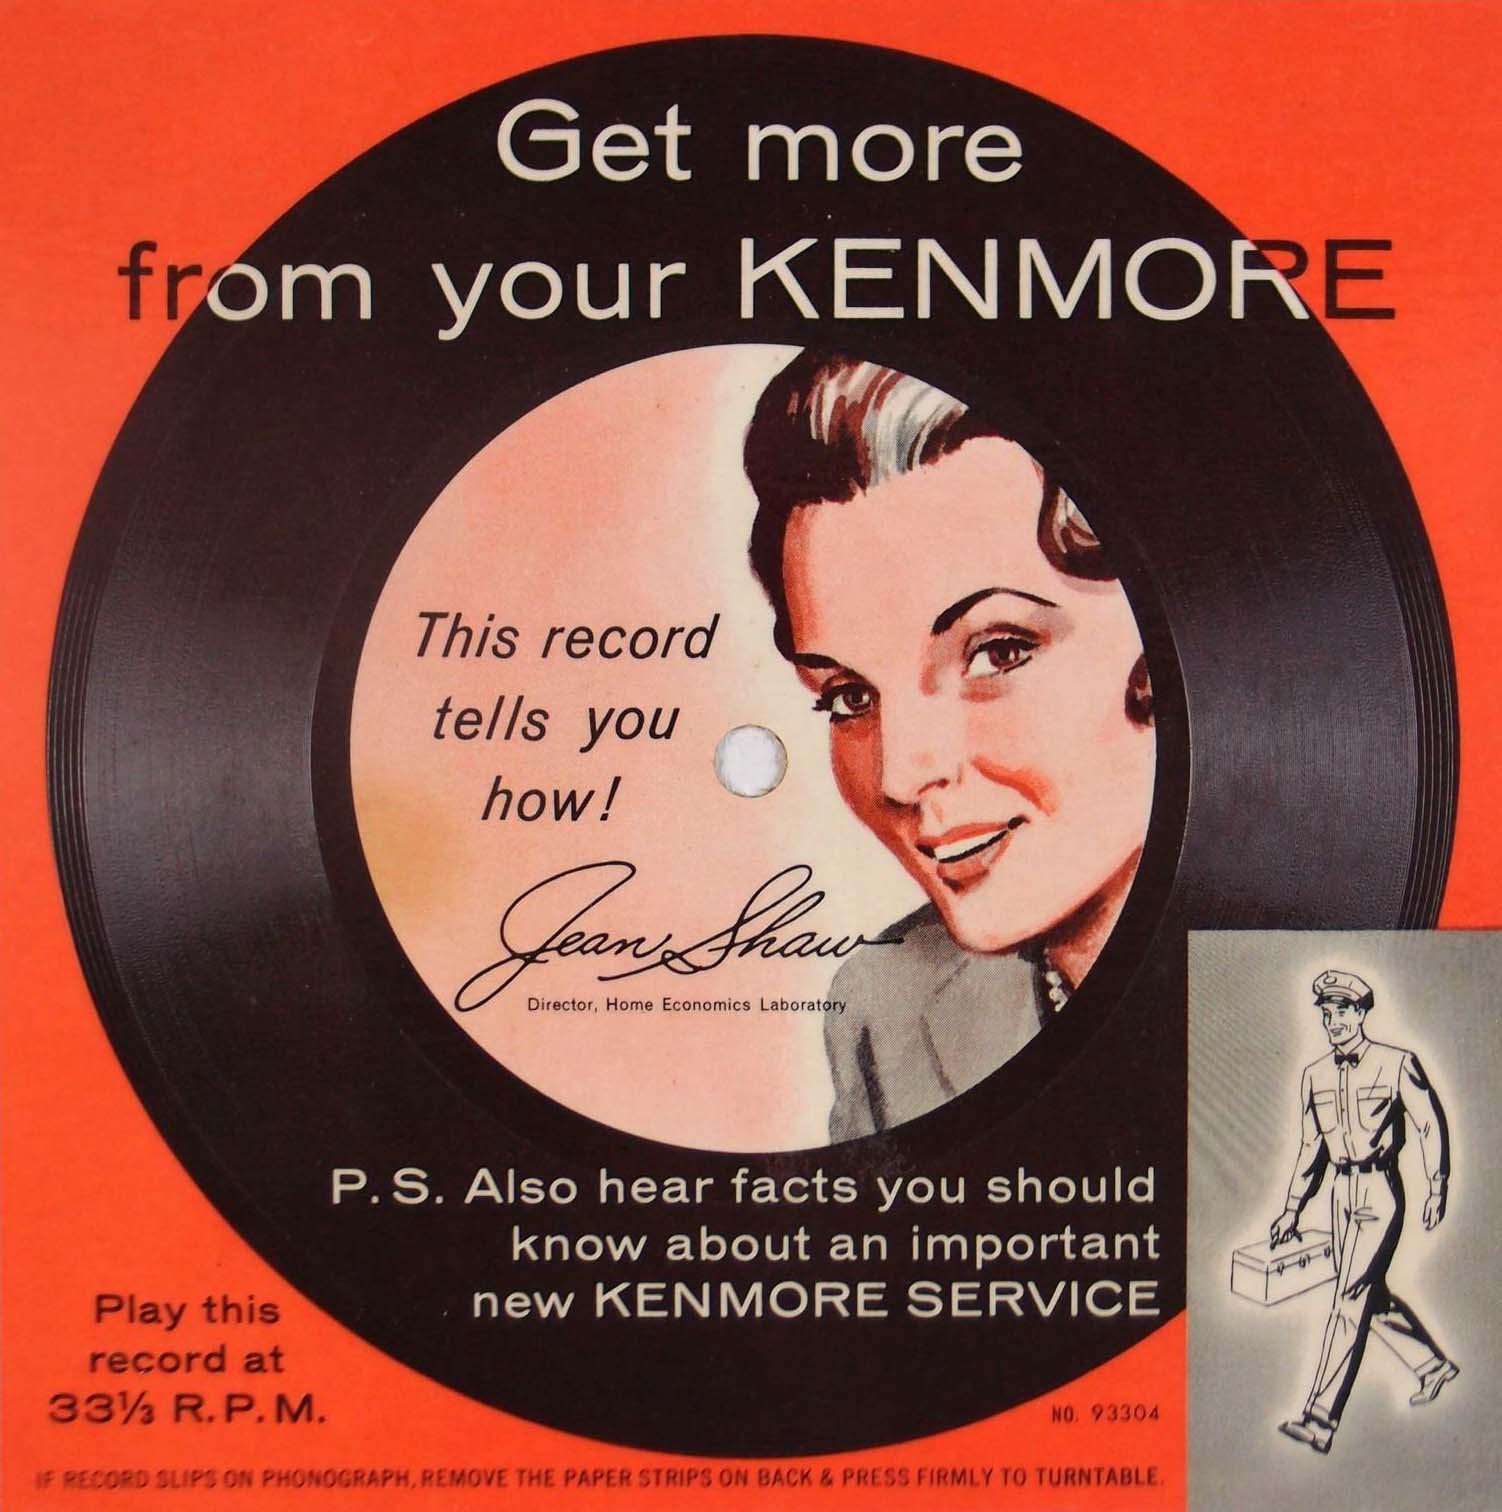 kenmore advertising album